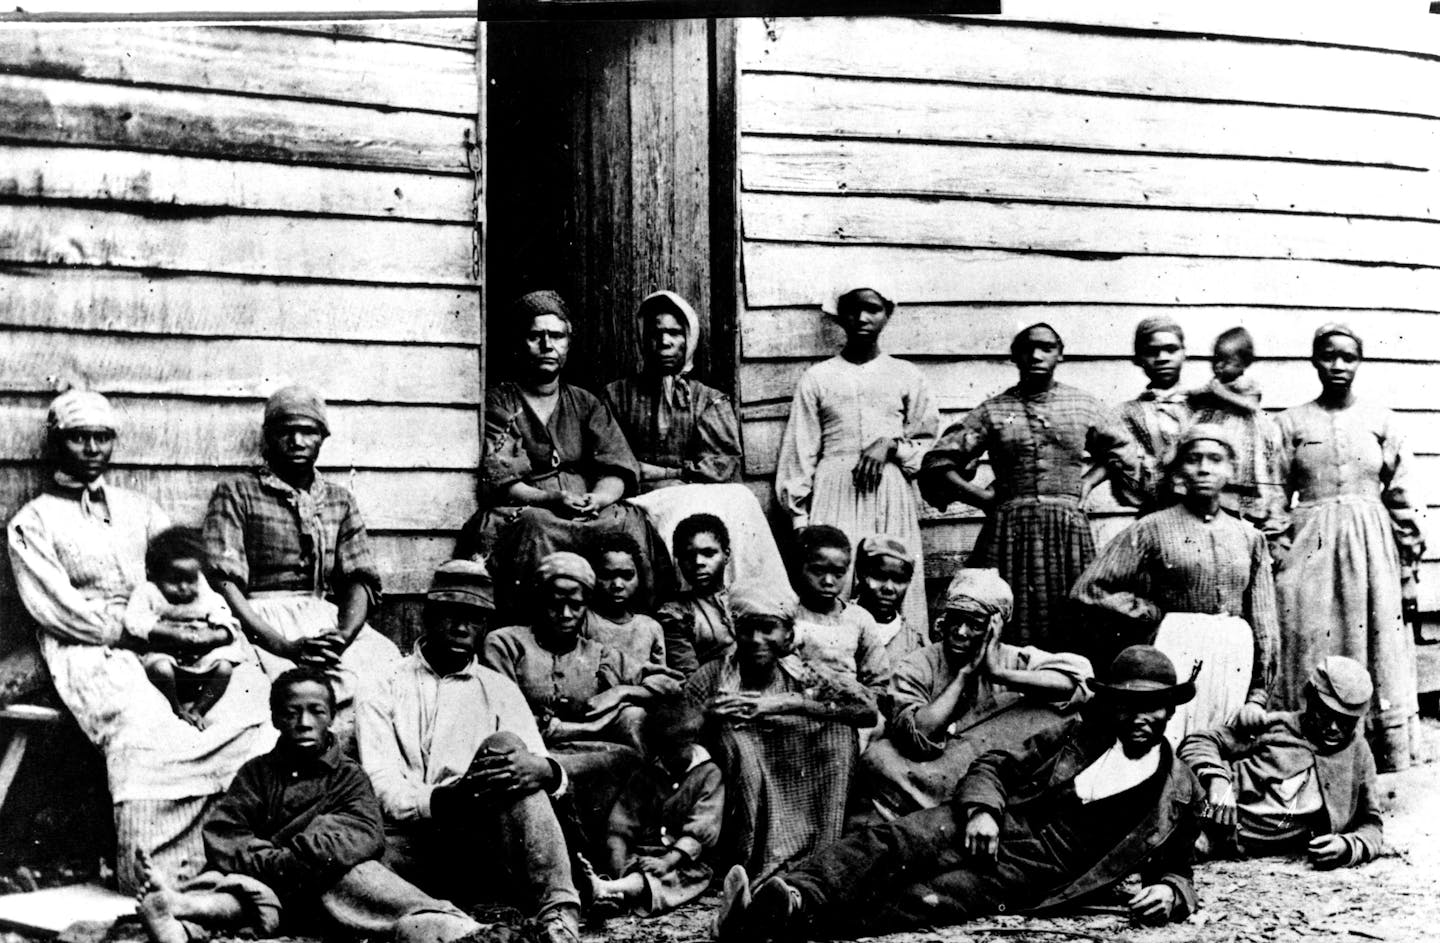 1860. Enslaved people on a South Carolina plantation.